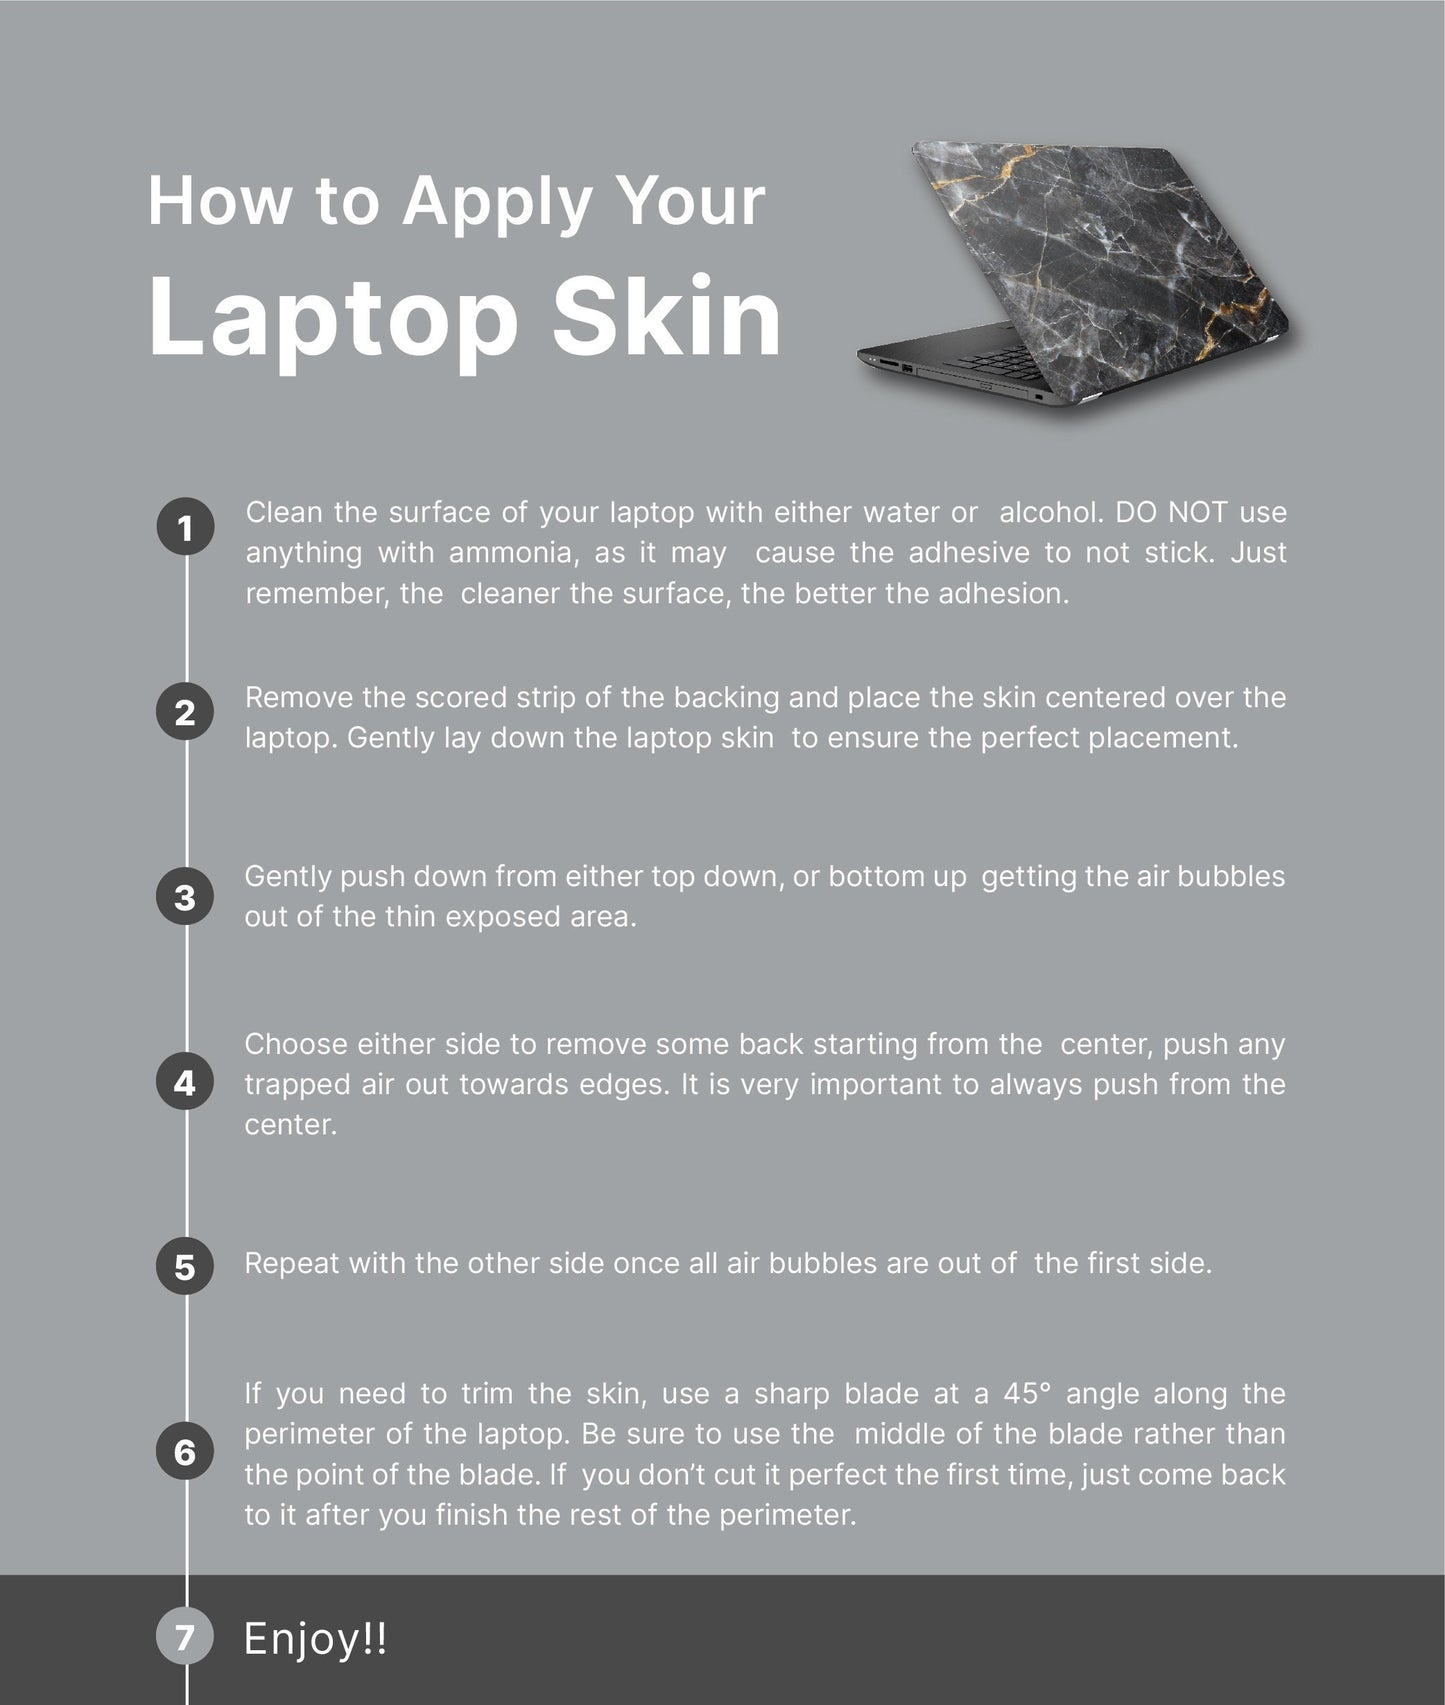 Tropical Floral Laptop Skin, Laptop Cover, Laptop Skins, Removable Laptop Skins, Laptop Decal, Customized Laptop Skin, Laptop Stickers 150